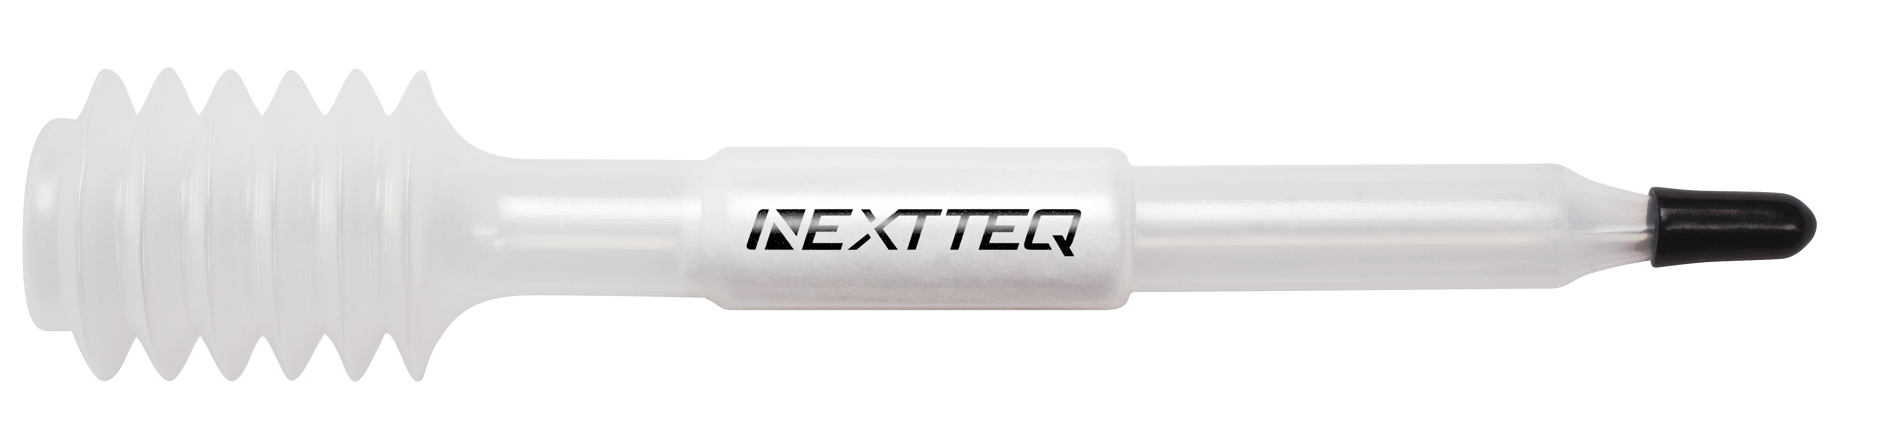 A Nextteq Irritant Smoke Generator pipette.